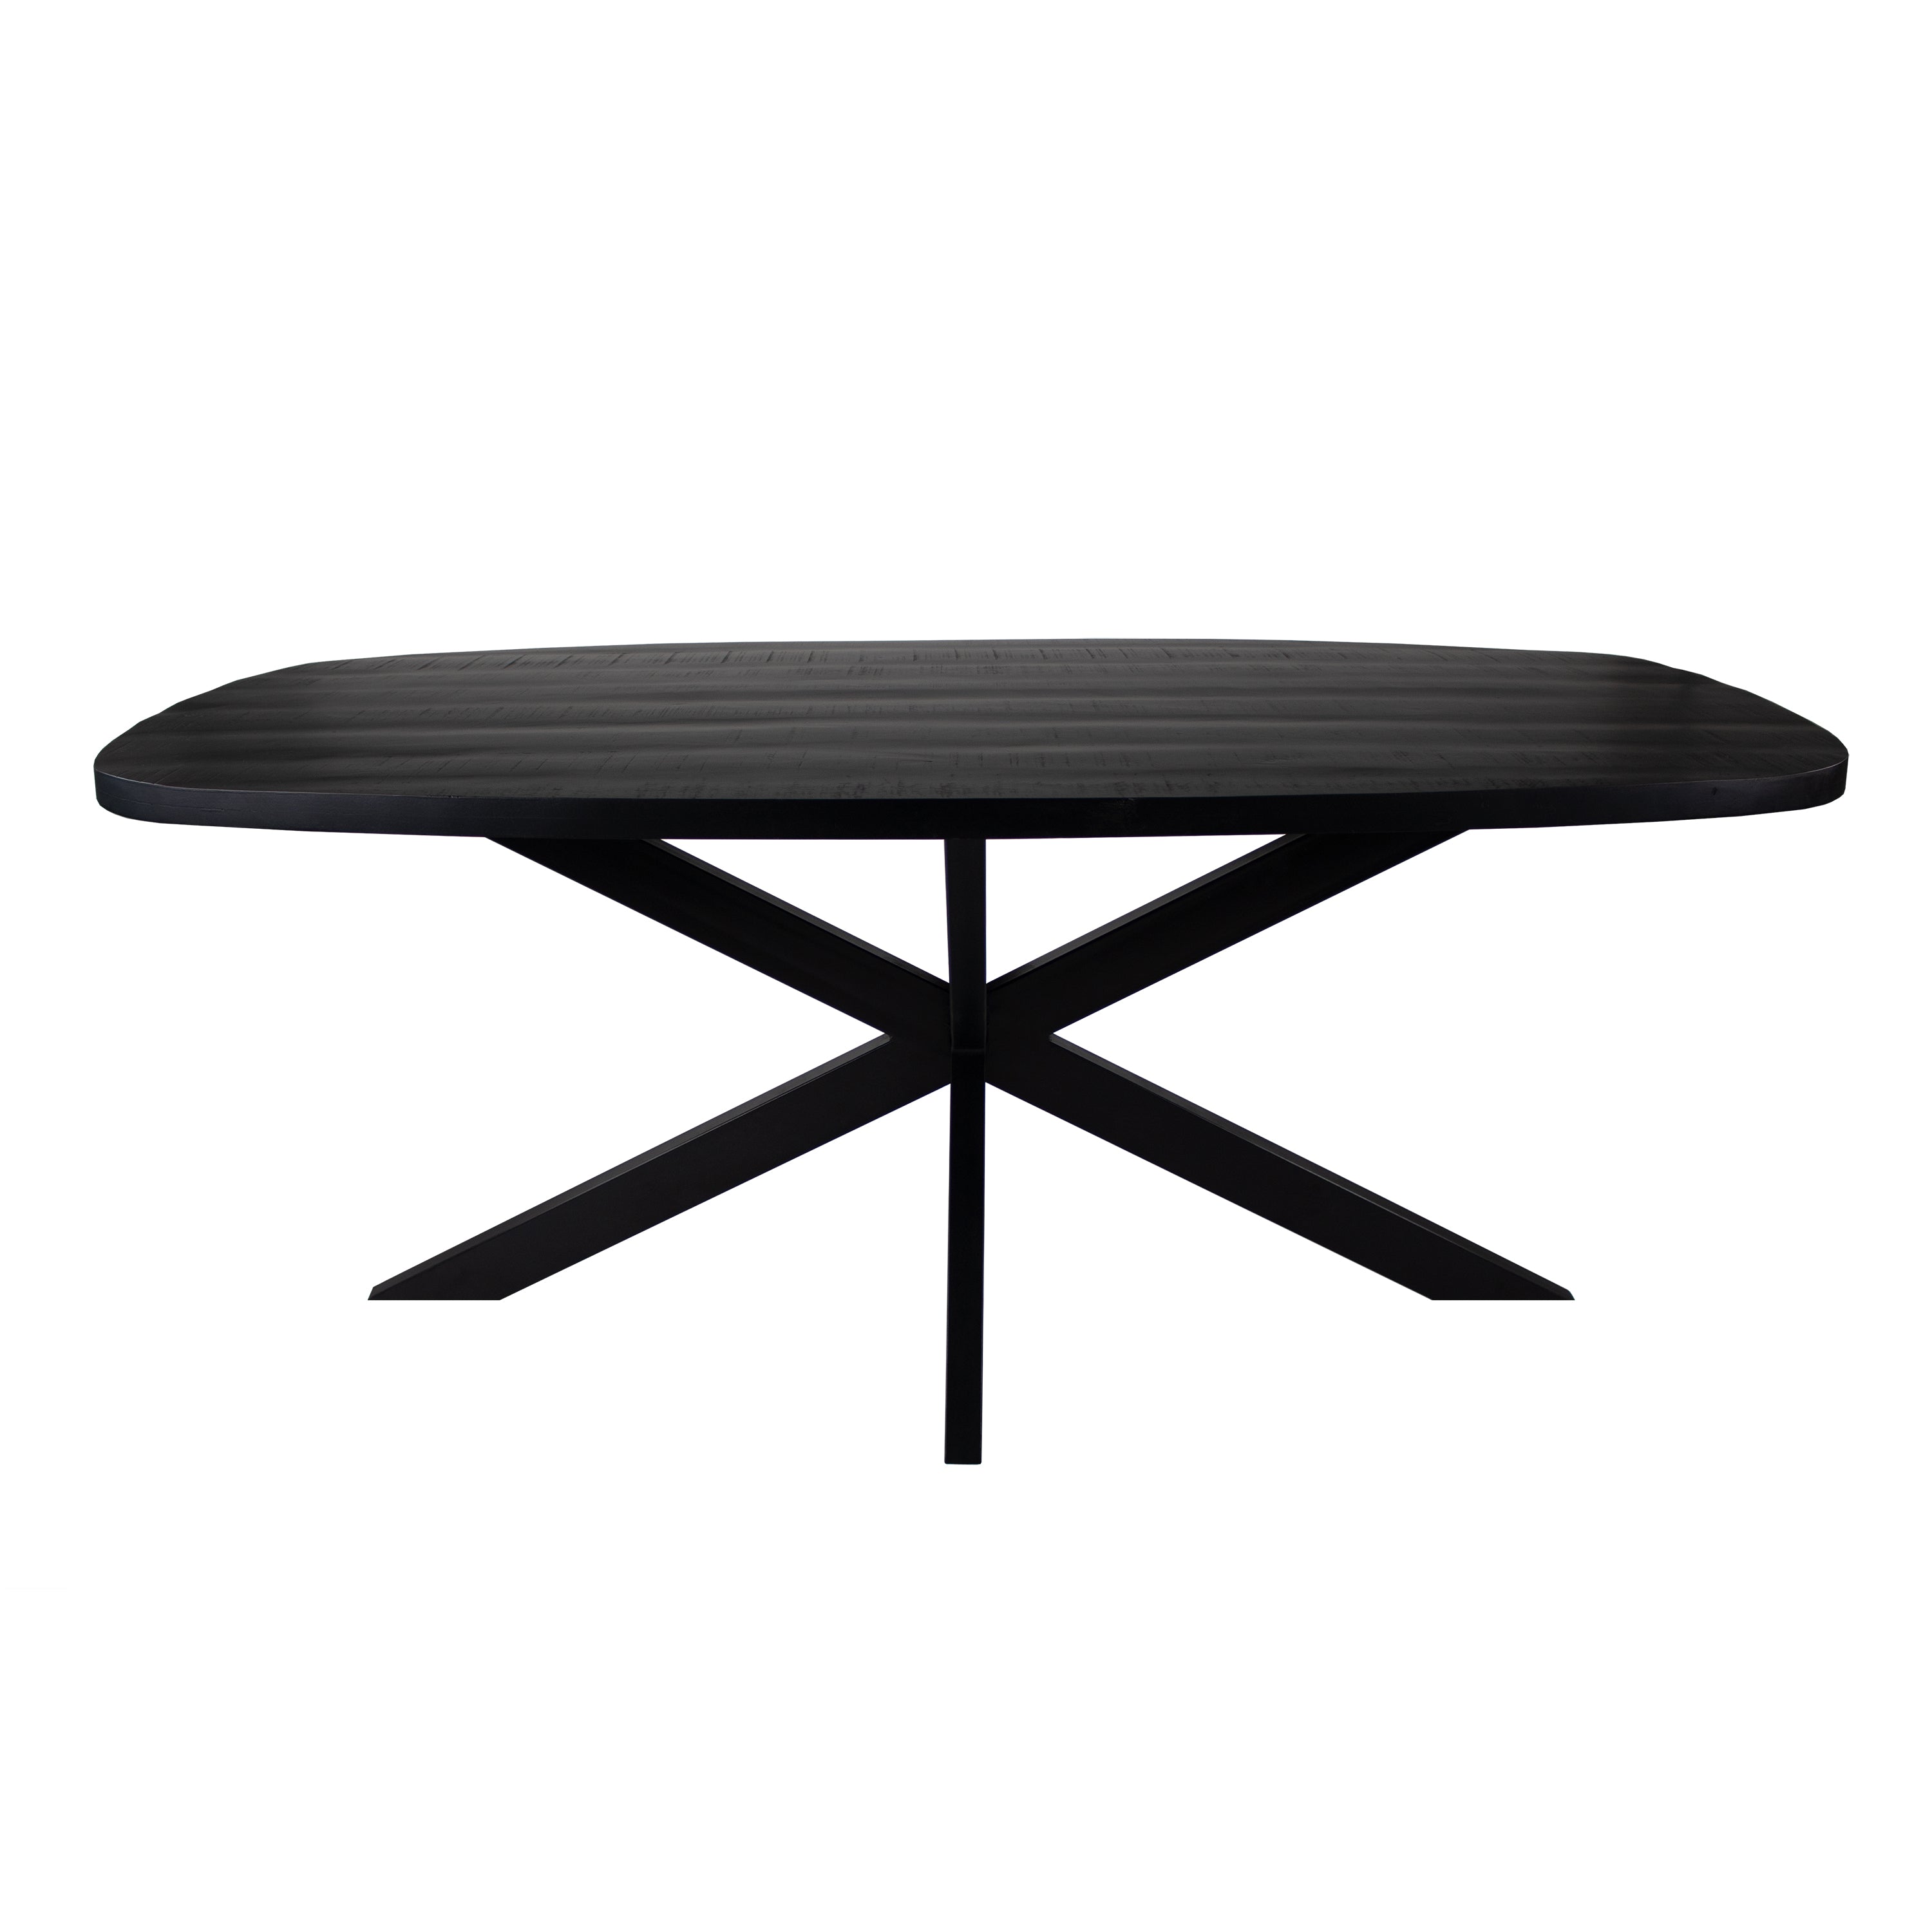 Kick dining table Dane - 240cm